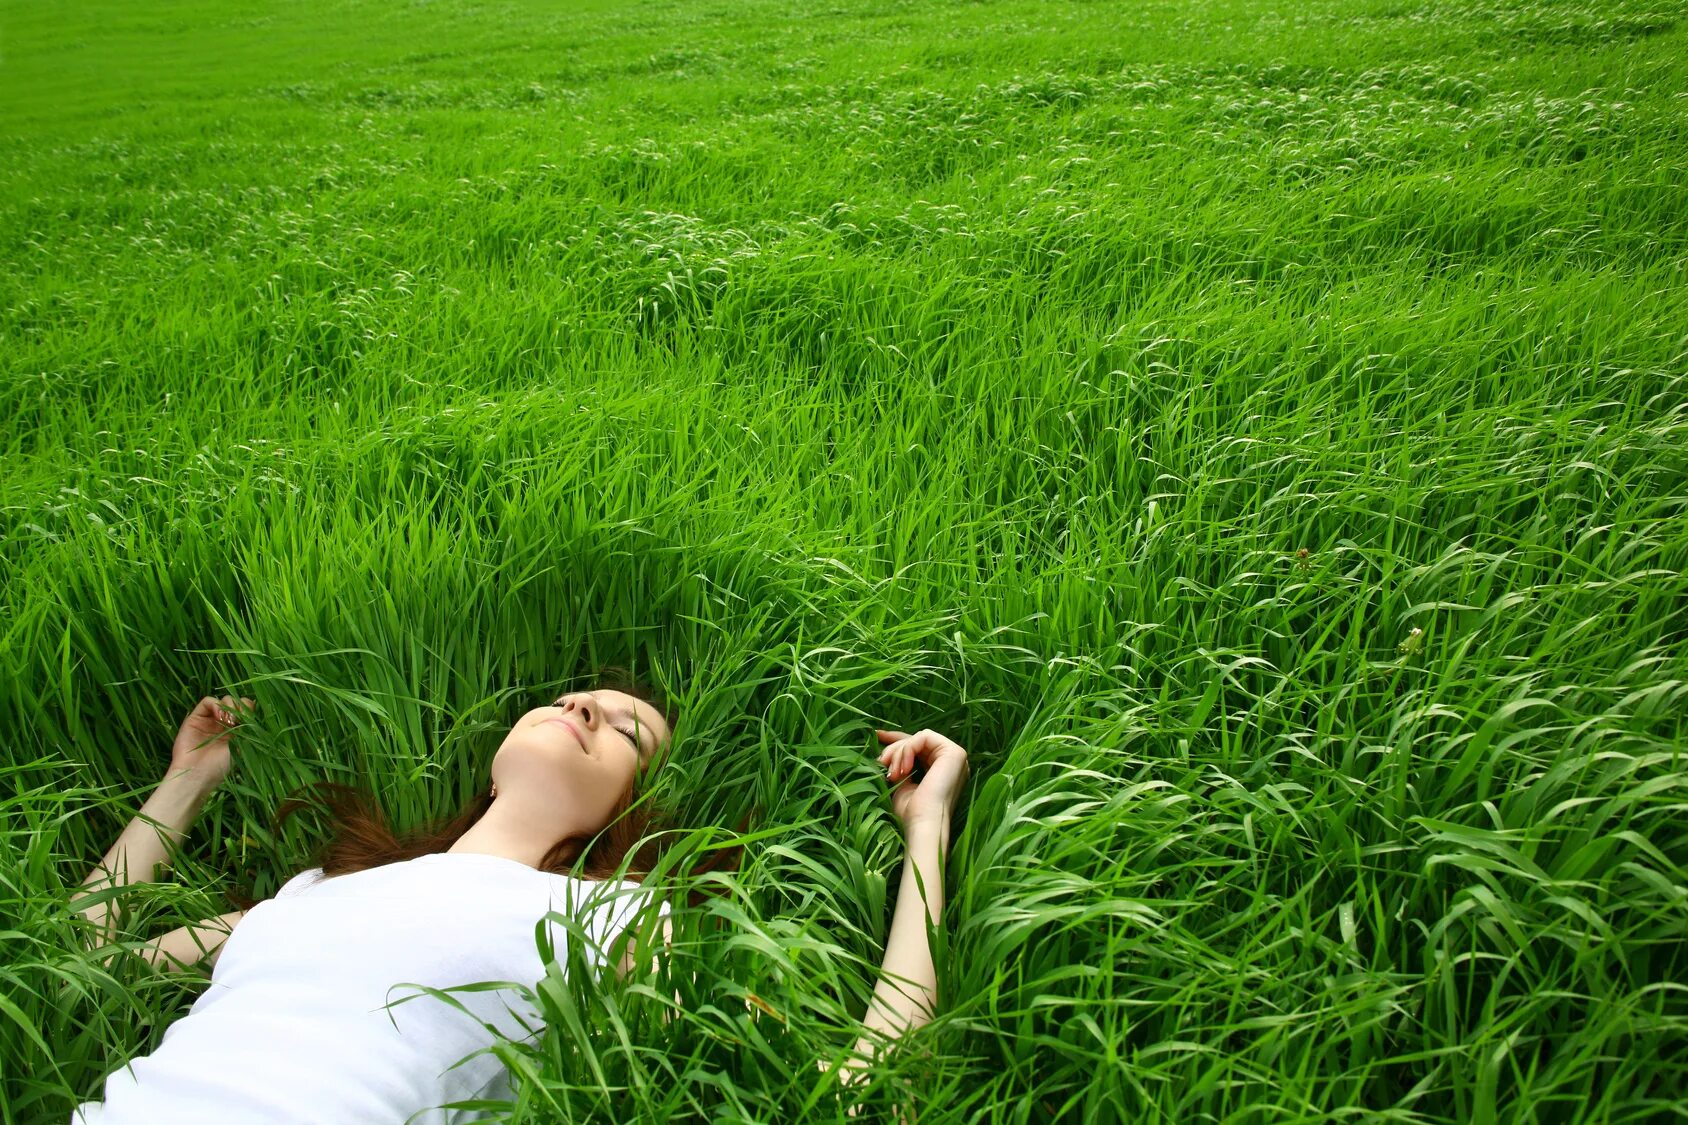 Релакс для нервов. Девушка в траве. Лежит на траве. Человек лежит на траве. Расслабление на природе.